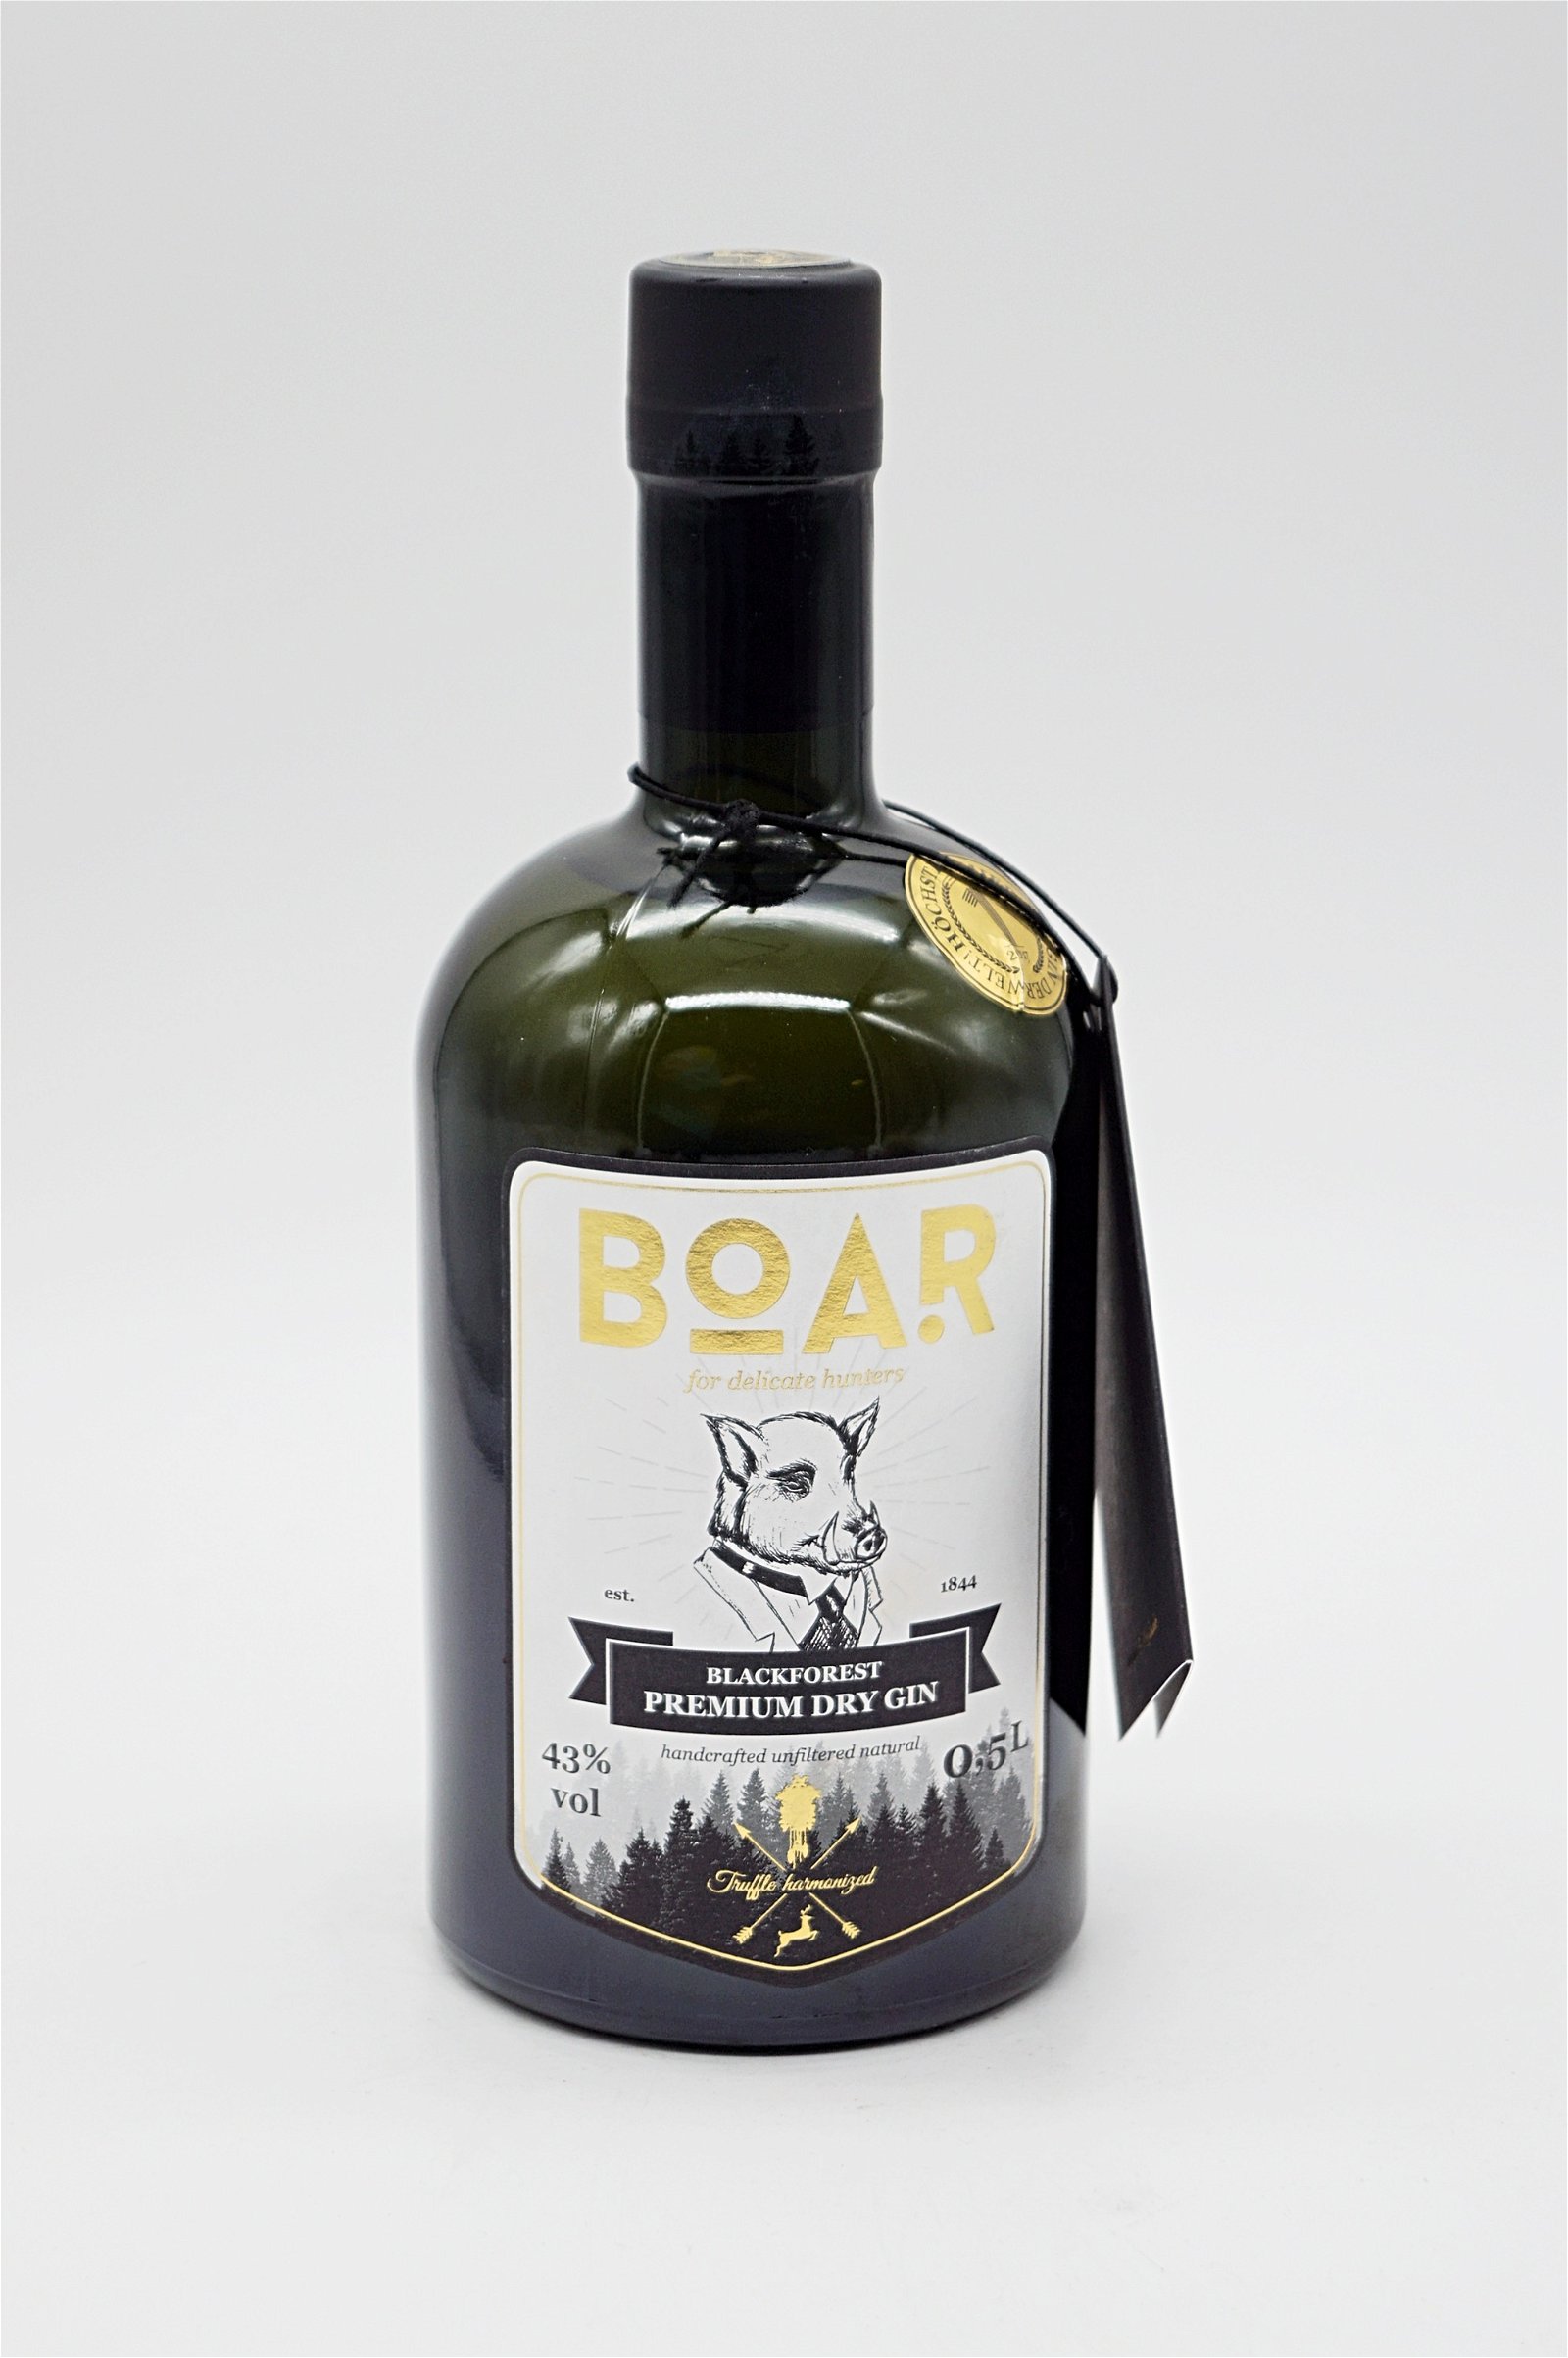 BOAR Blackforest Premium Dry Gin